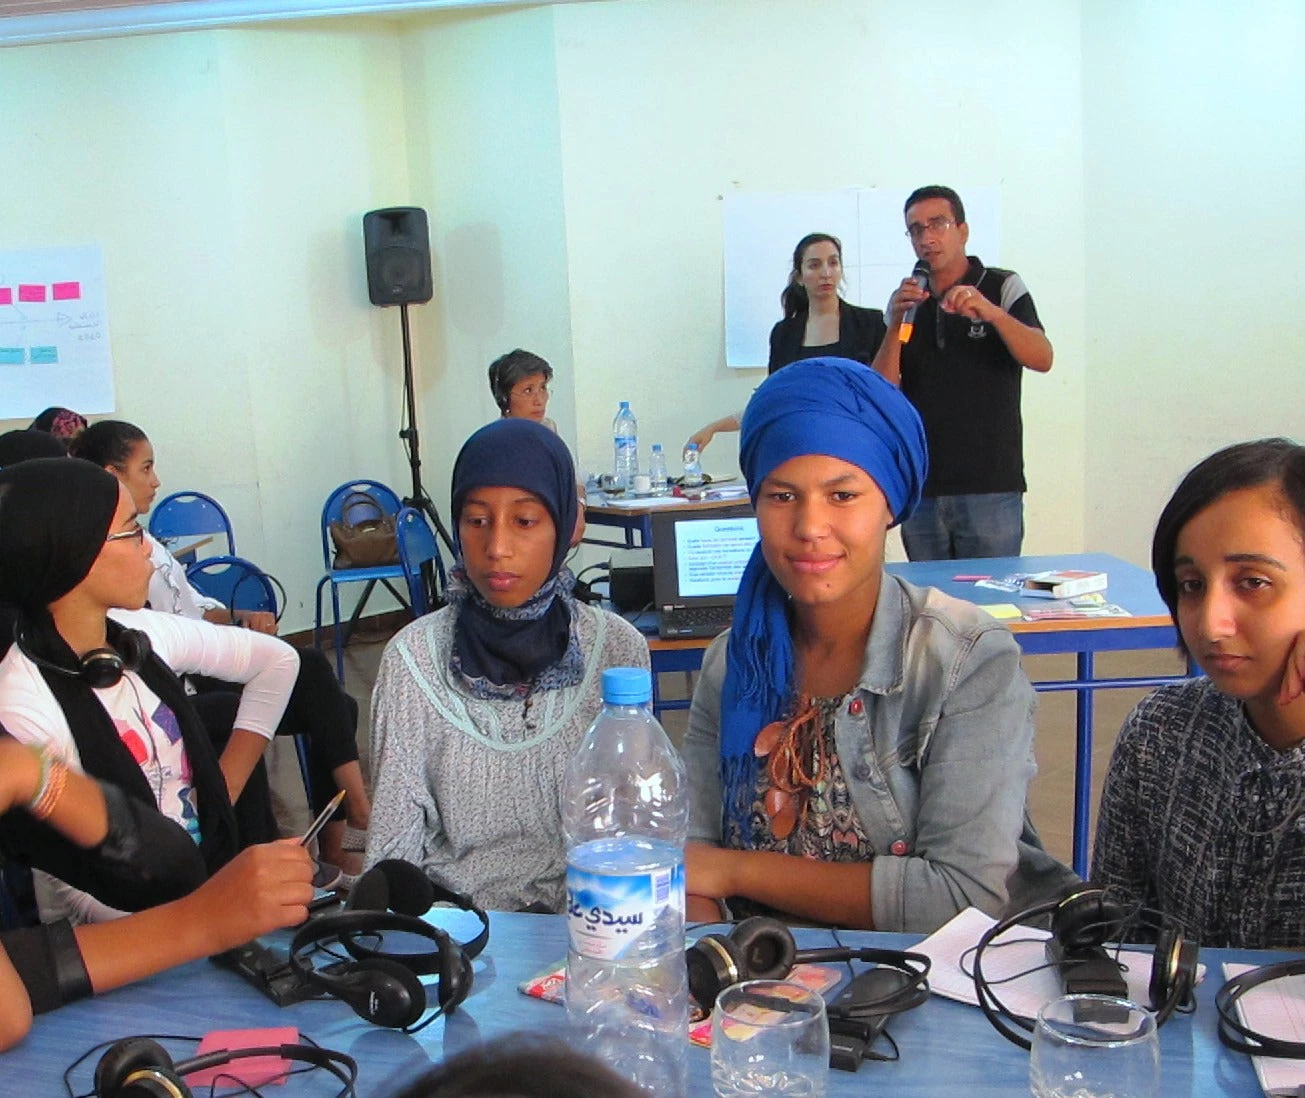 Sidi Slimane Youth Workshop - I. Alaoui l World Bank